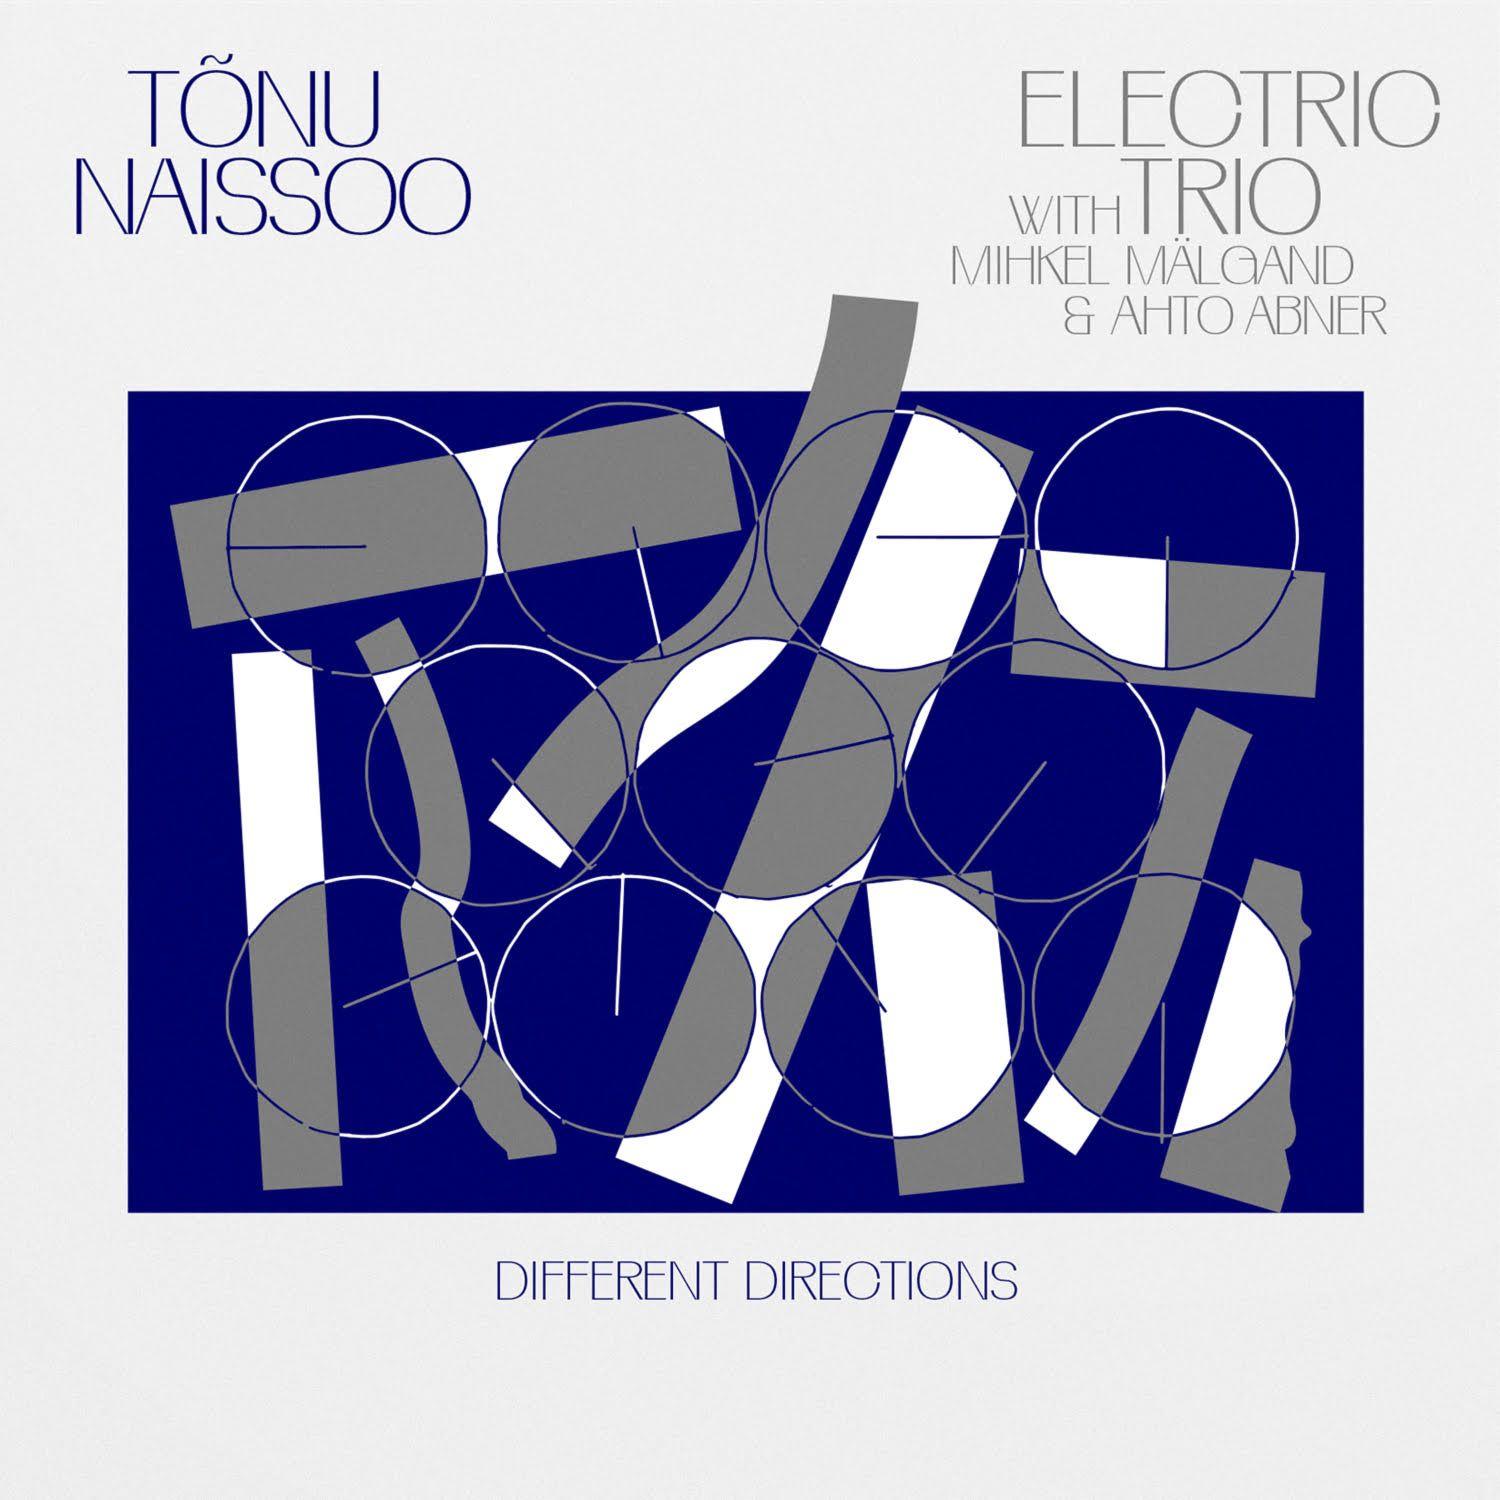 Tõnu Naissoo Electric Trio - Different Directions (2021) LP